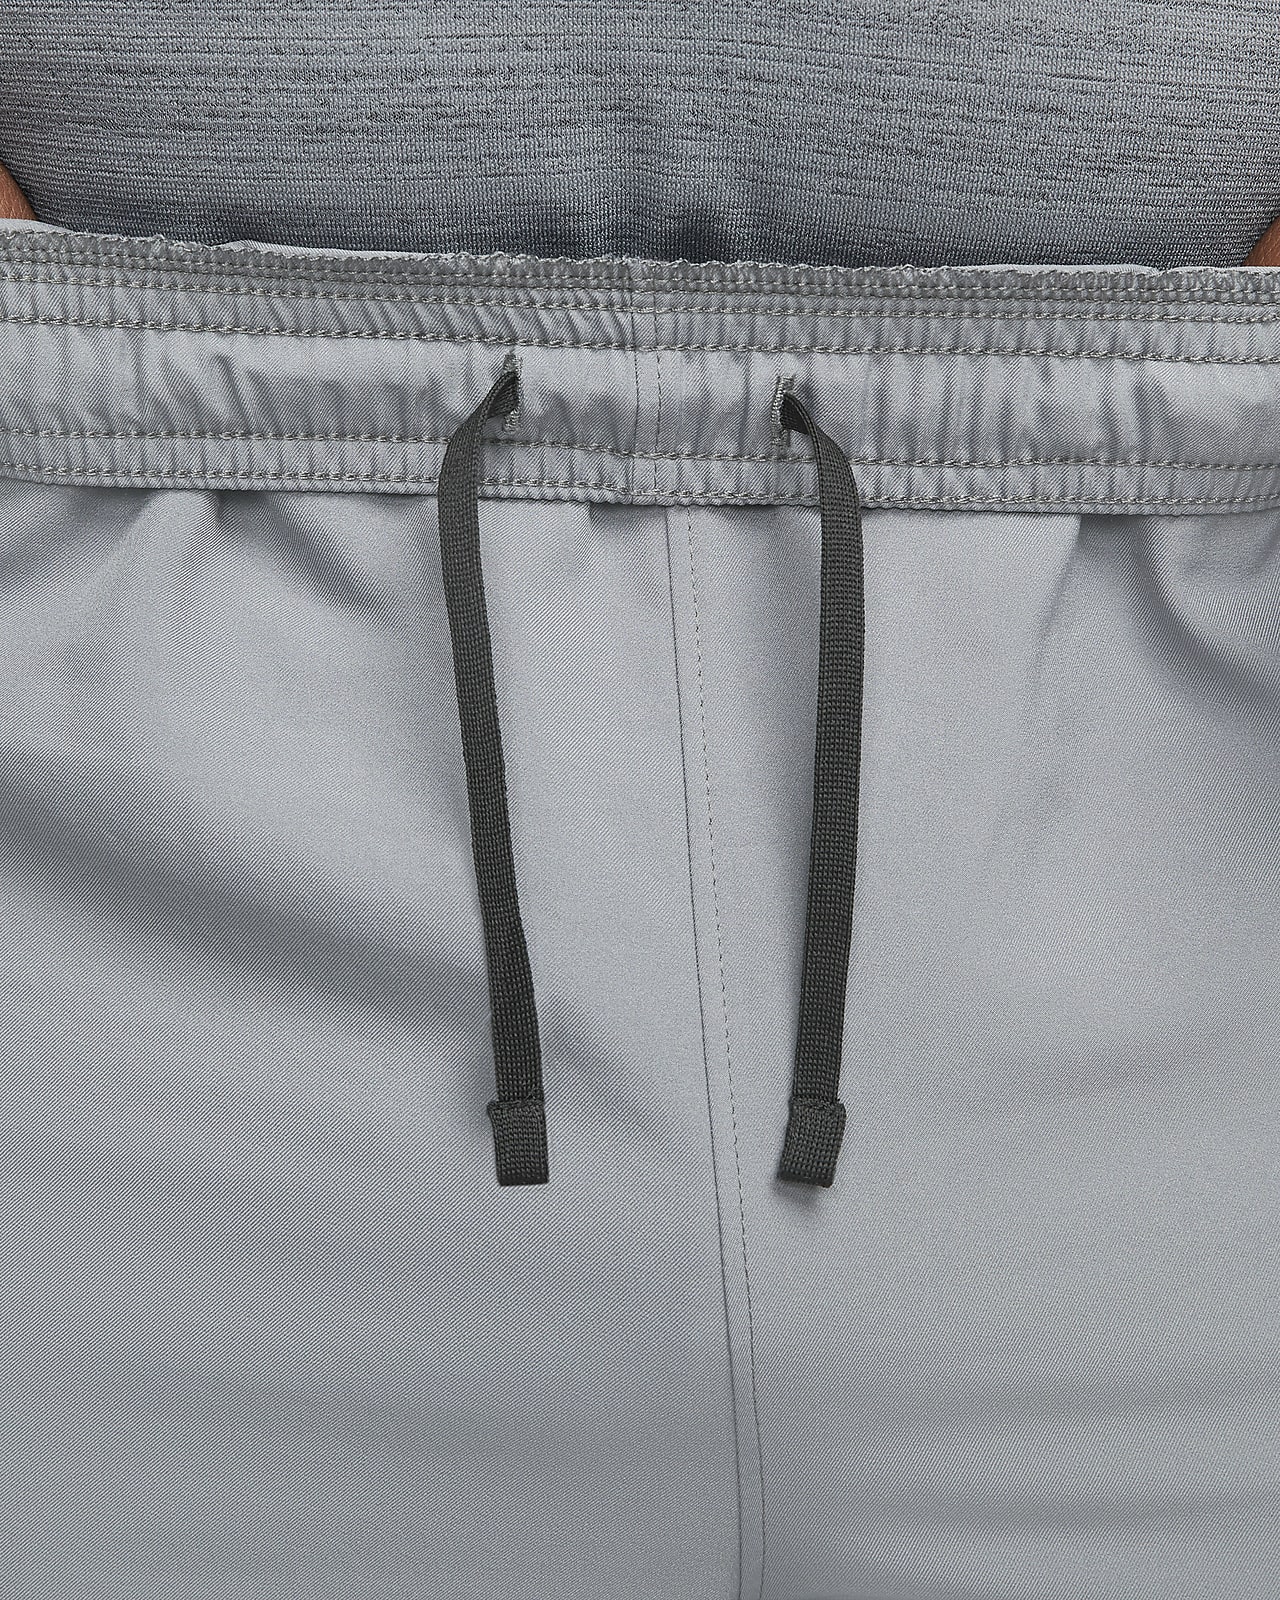 Nike Dri-FIT Challenger Men's Woven Running Pants Smoke Grey